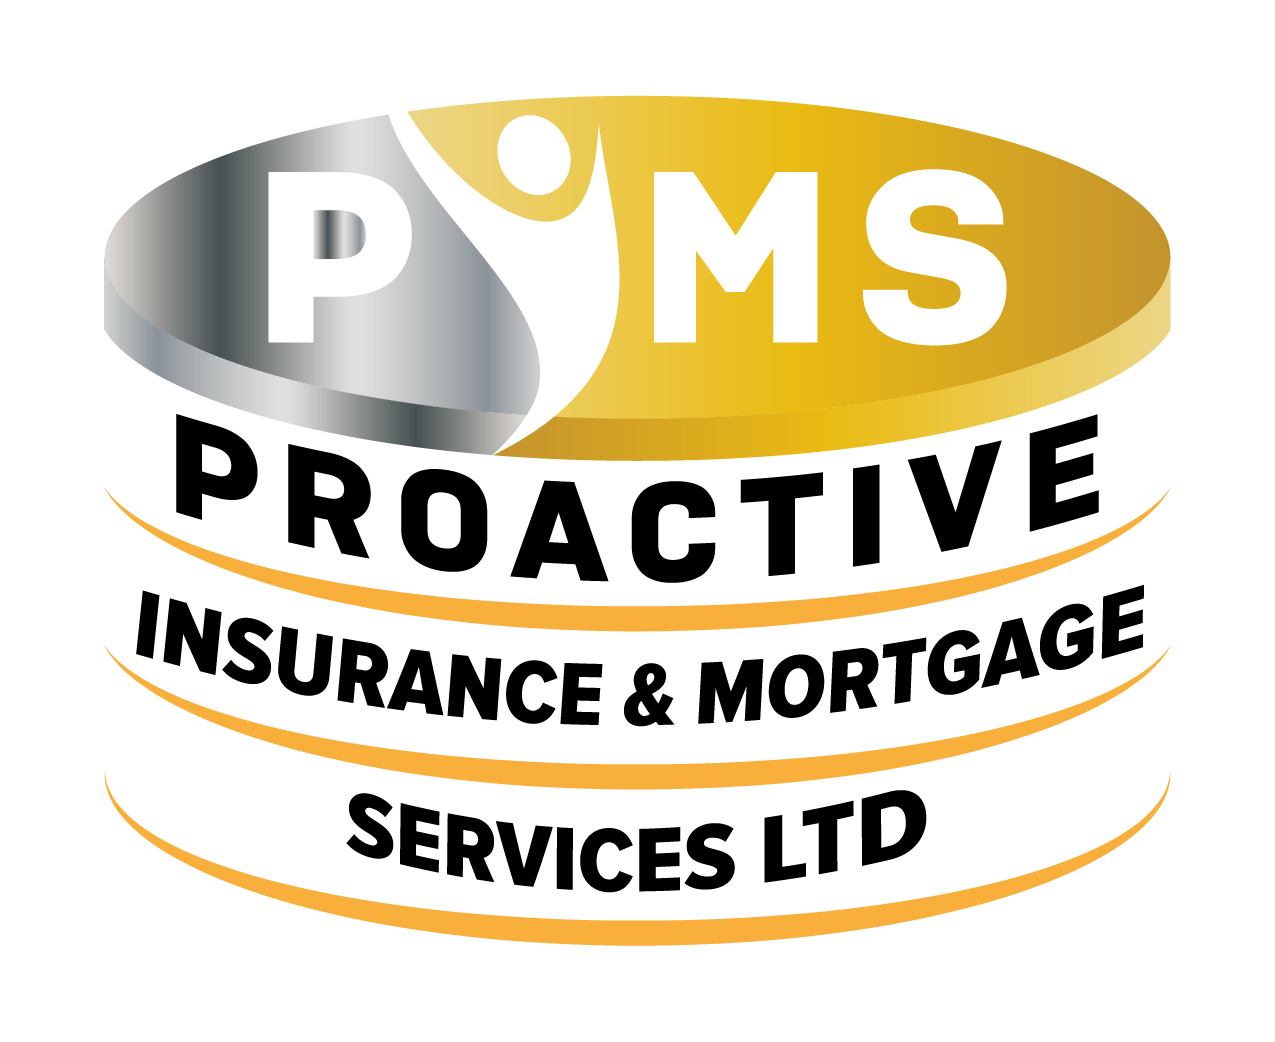 Proactive Insurance & Mortgage Services Ltd